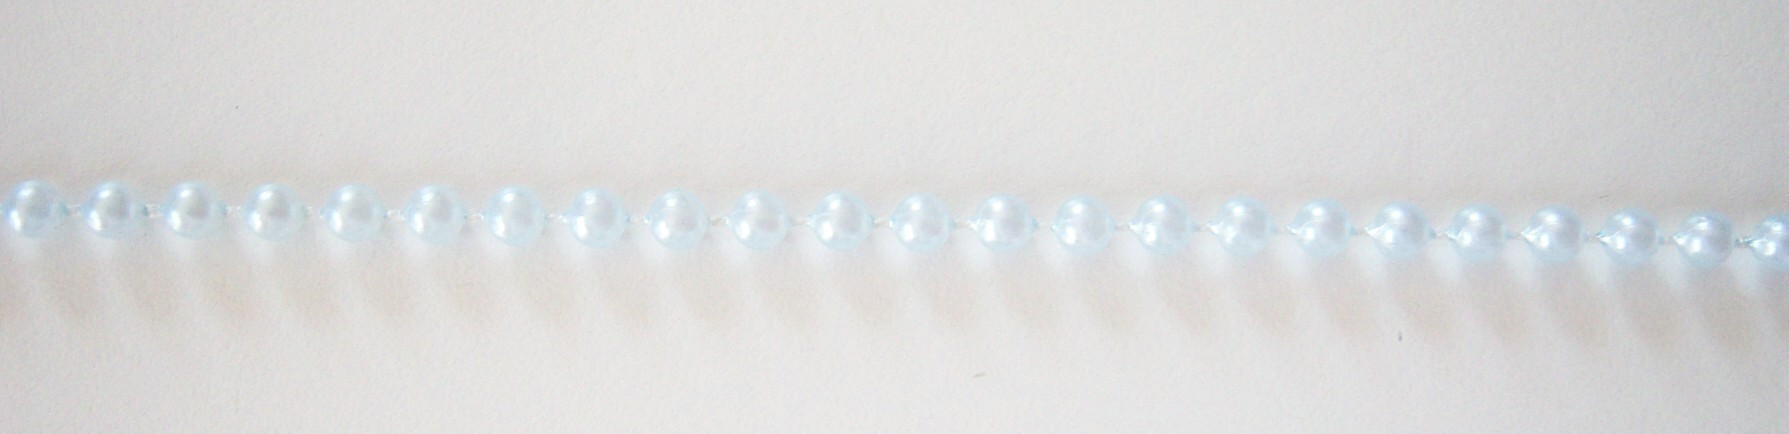 Powder Blue 4mm Imitation Pearls